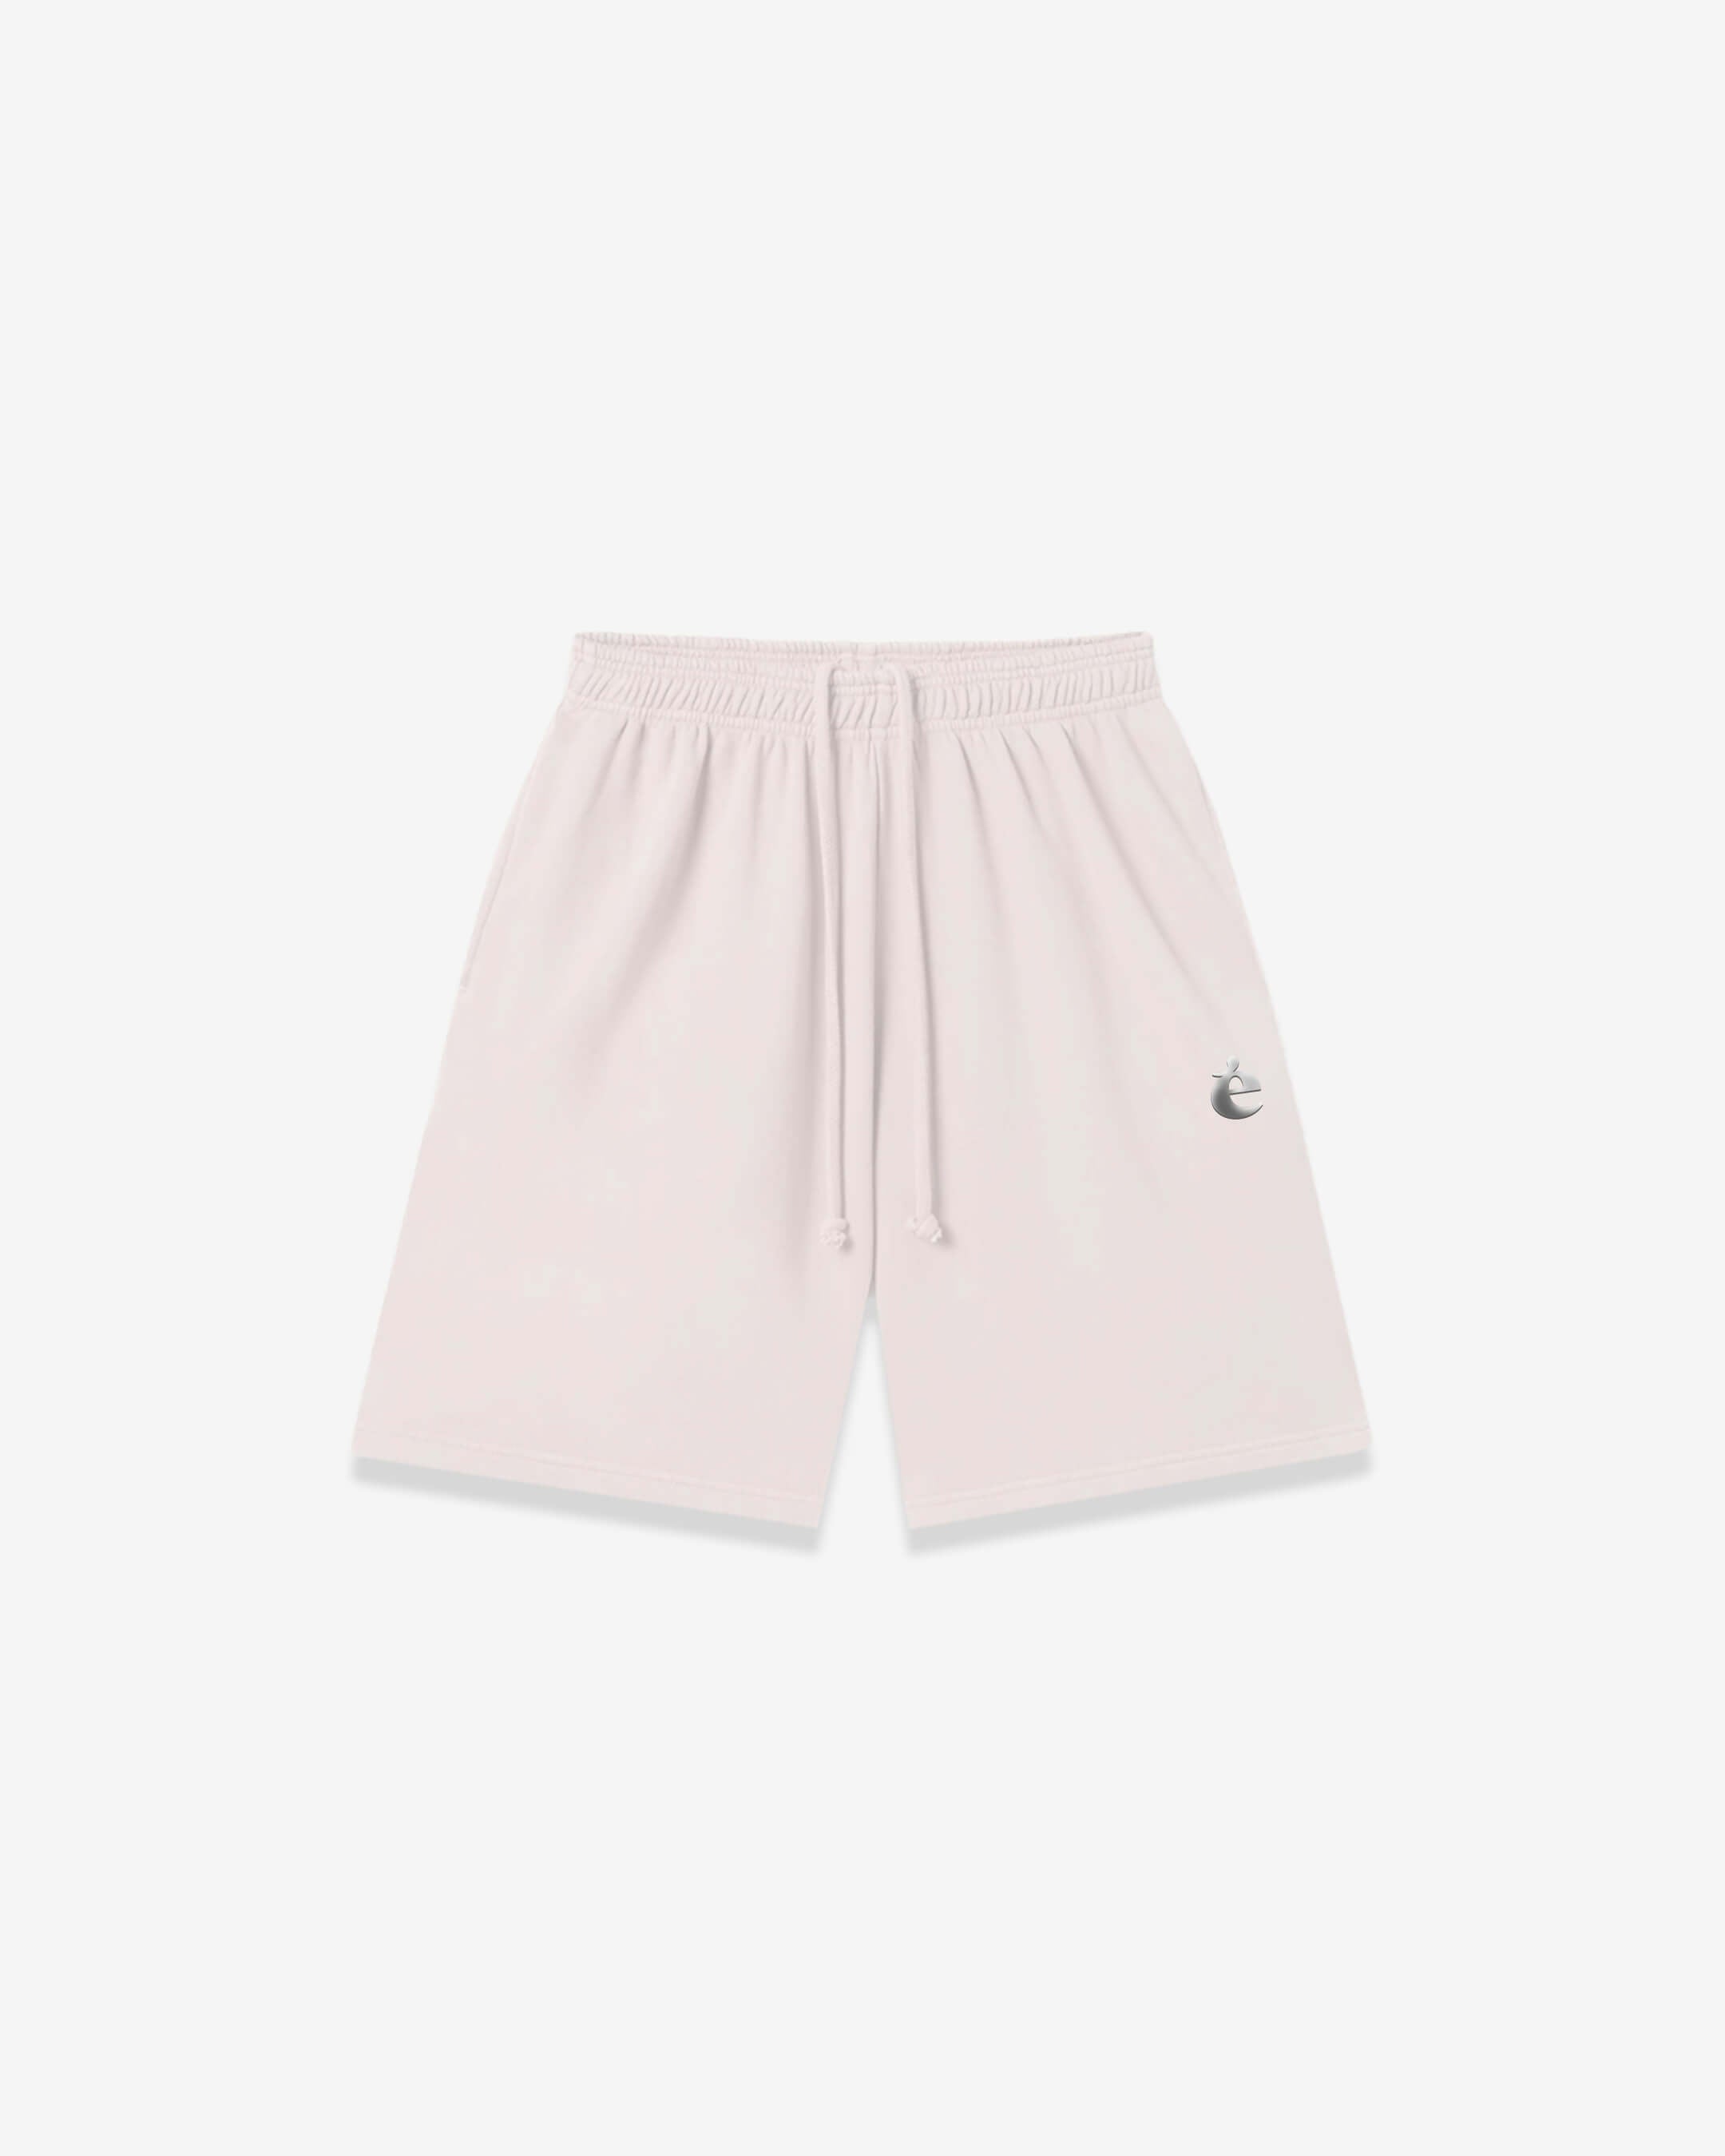 Basic Summer Shorts - Grey Lilac